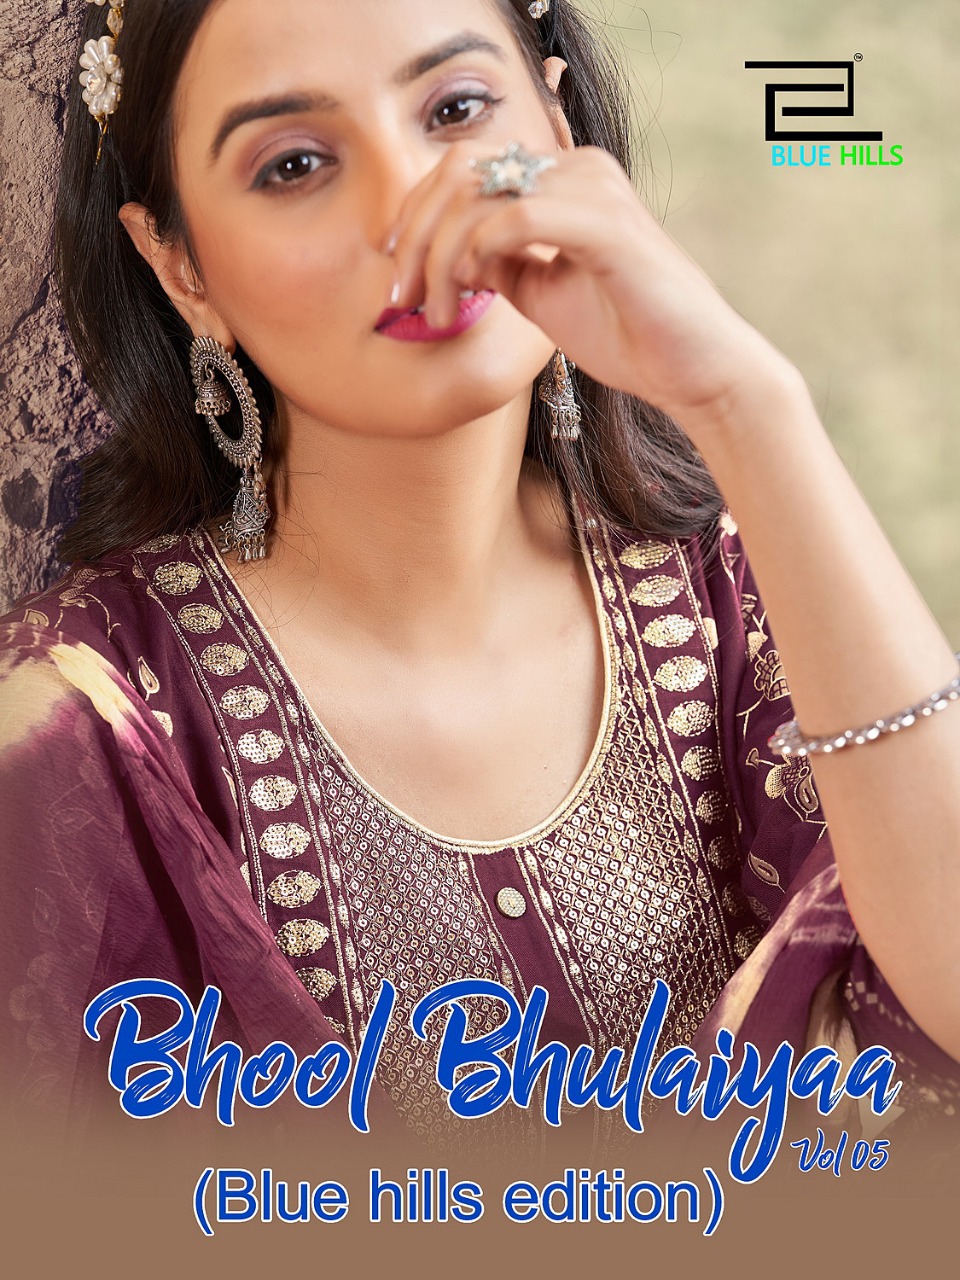 Blue Hills Bhool bhulaiyaa Vol 5 collection 9